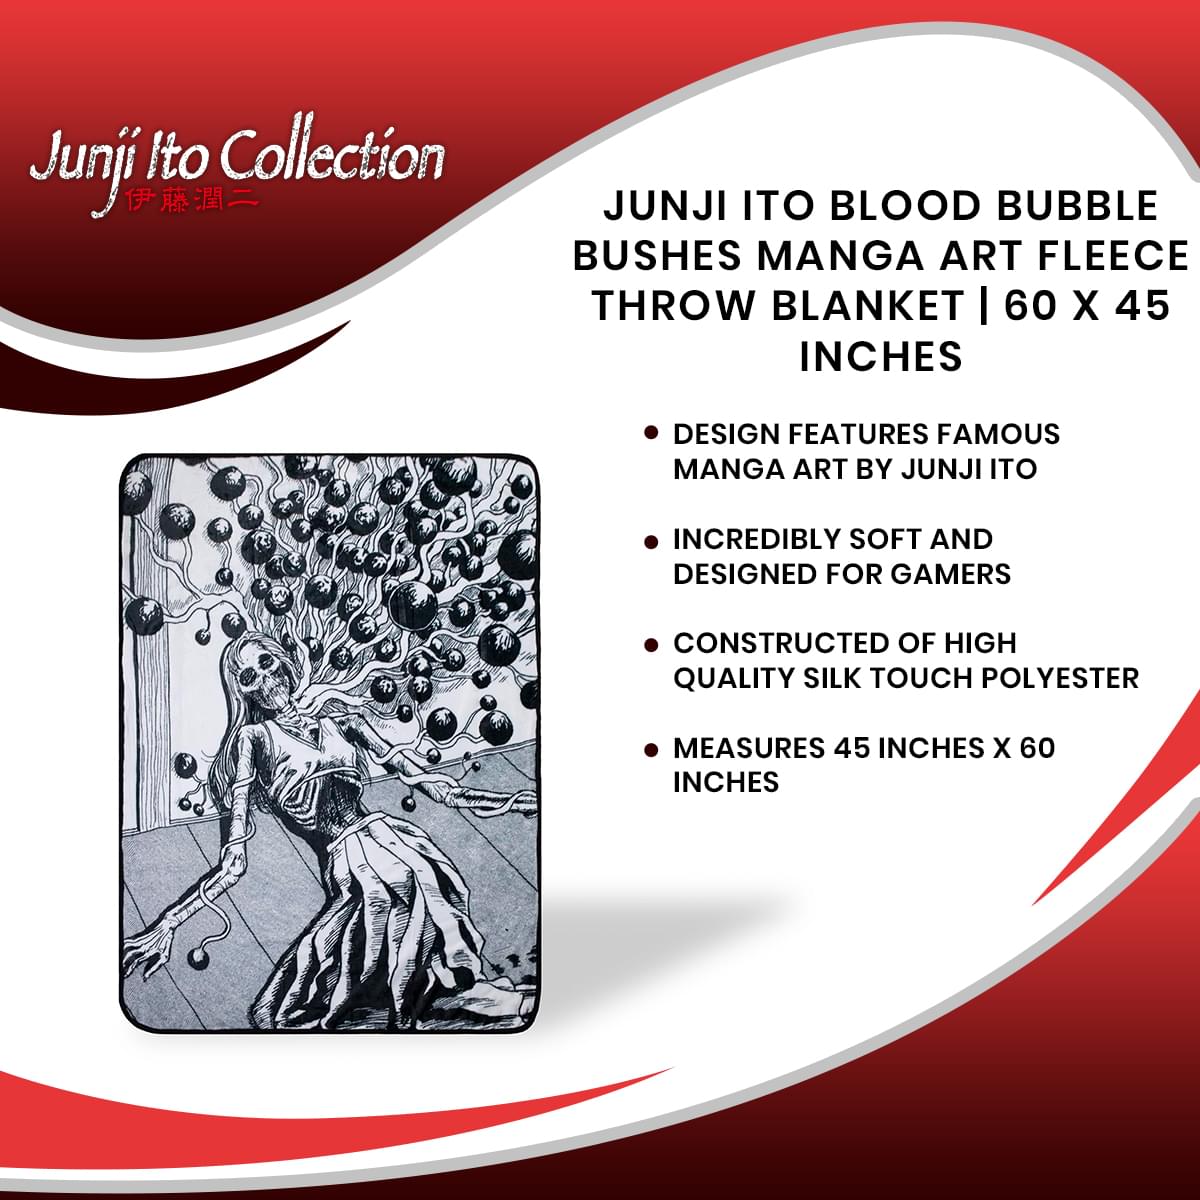 Junji Ito Blood Bubble Bushes Manga Art Fleece Throw Blanket | 60 x 45 Inches